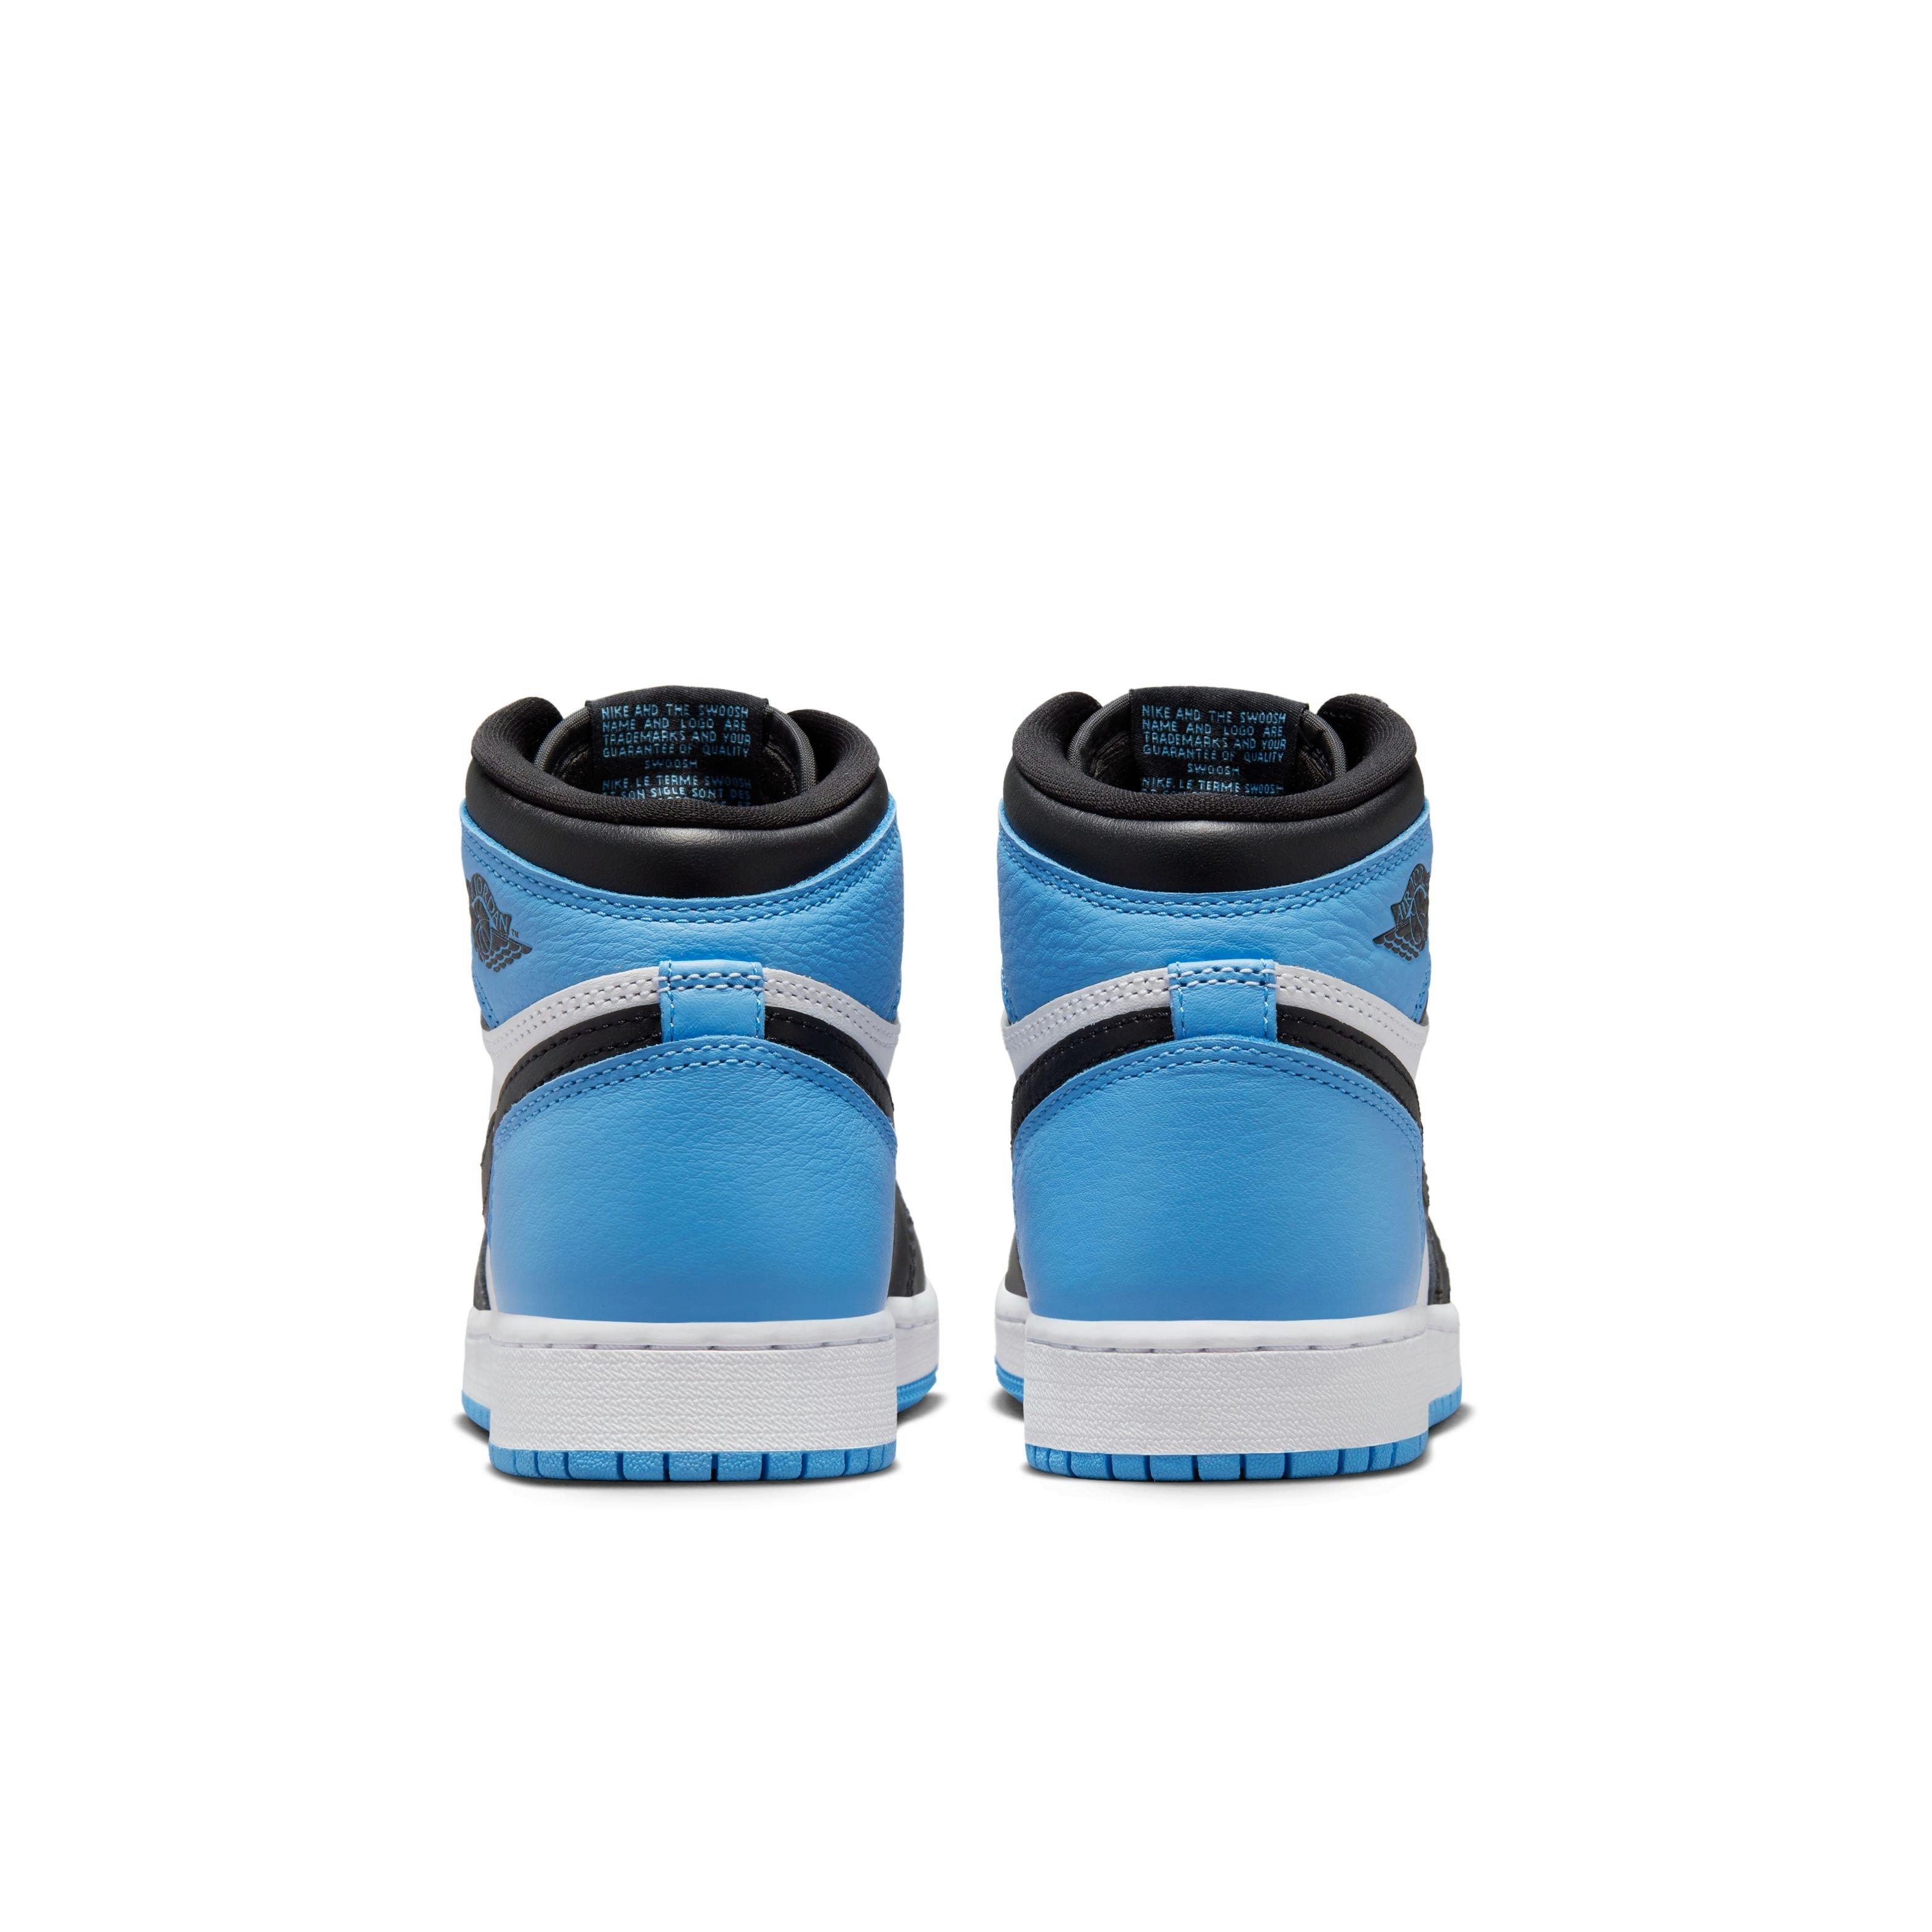 Jordan Air Jordan 1 Retro High OG 'University Blue’ Toddler